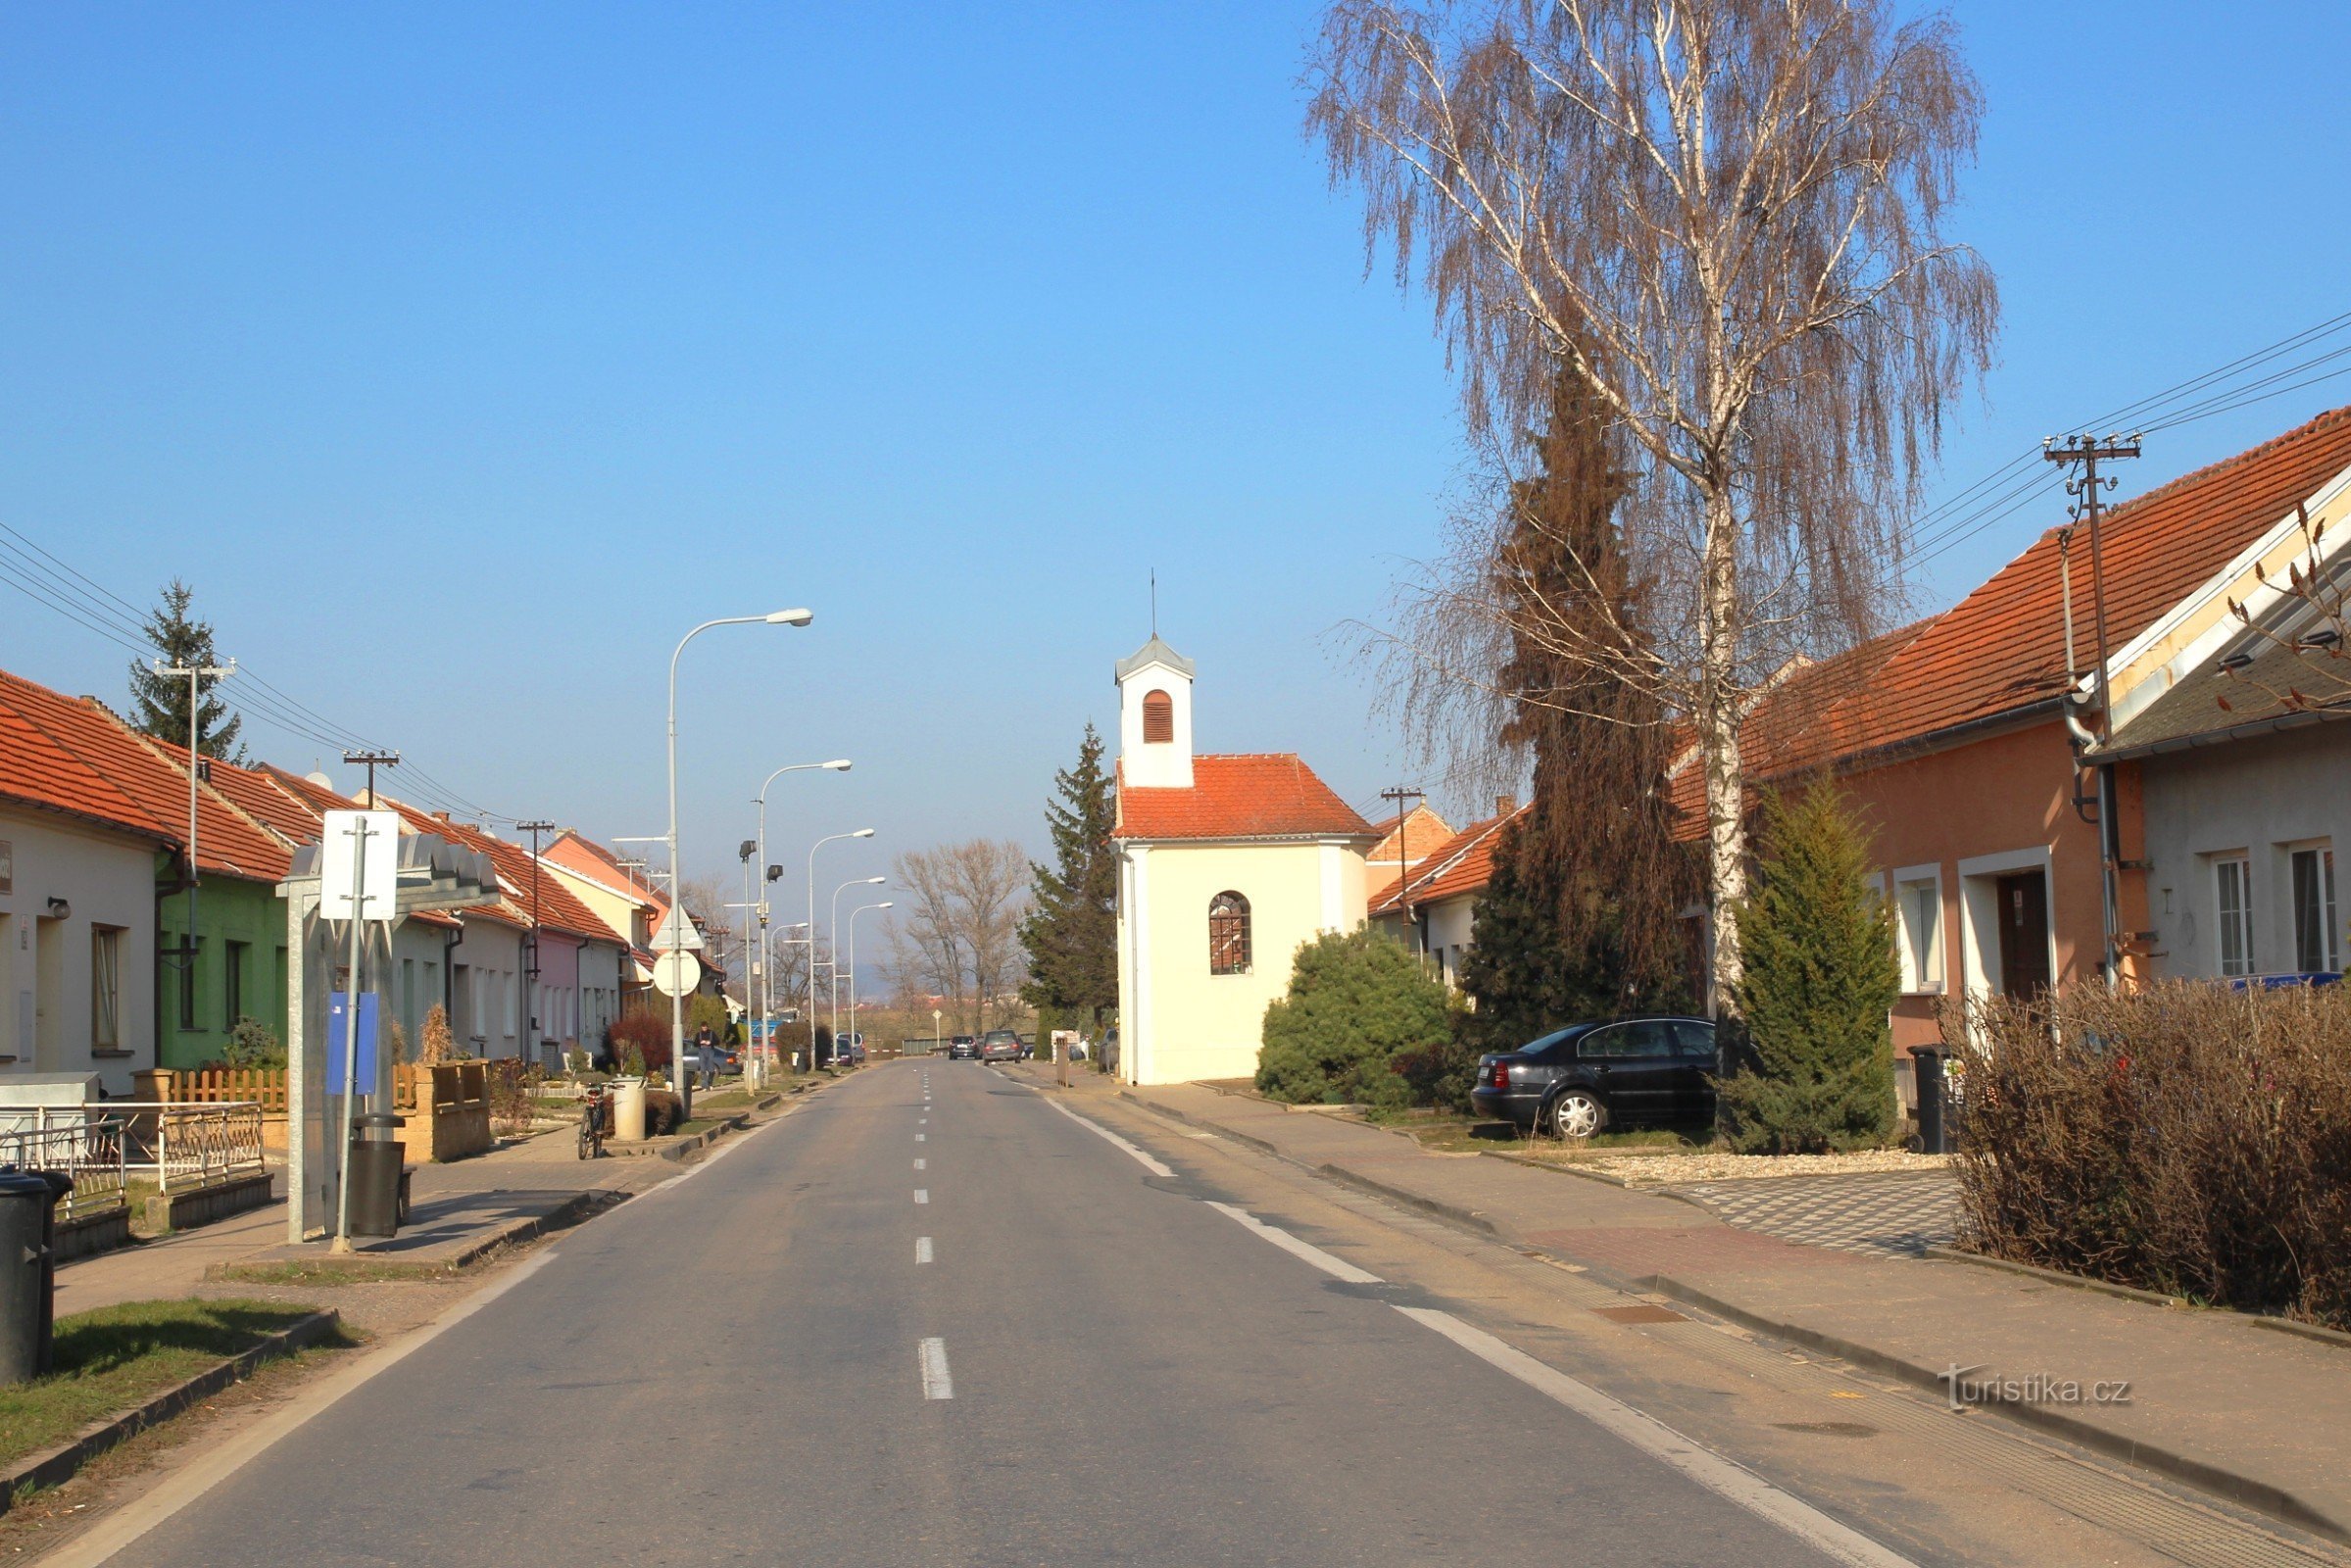 Zapletalova street